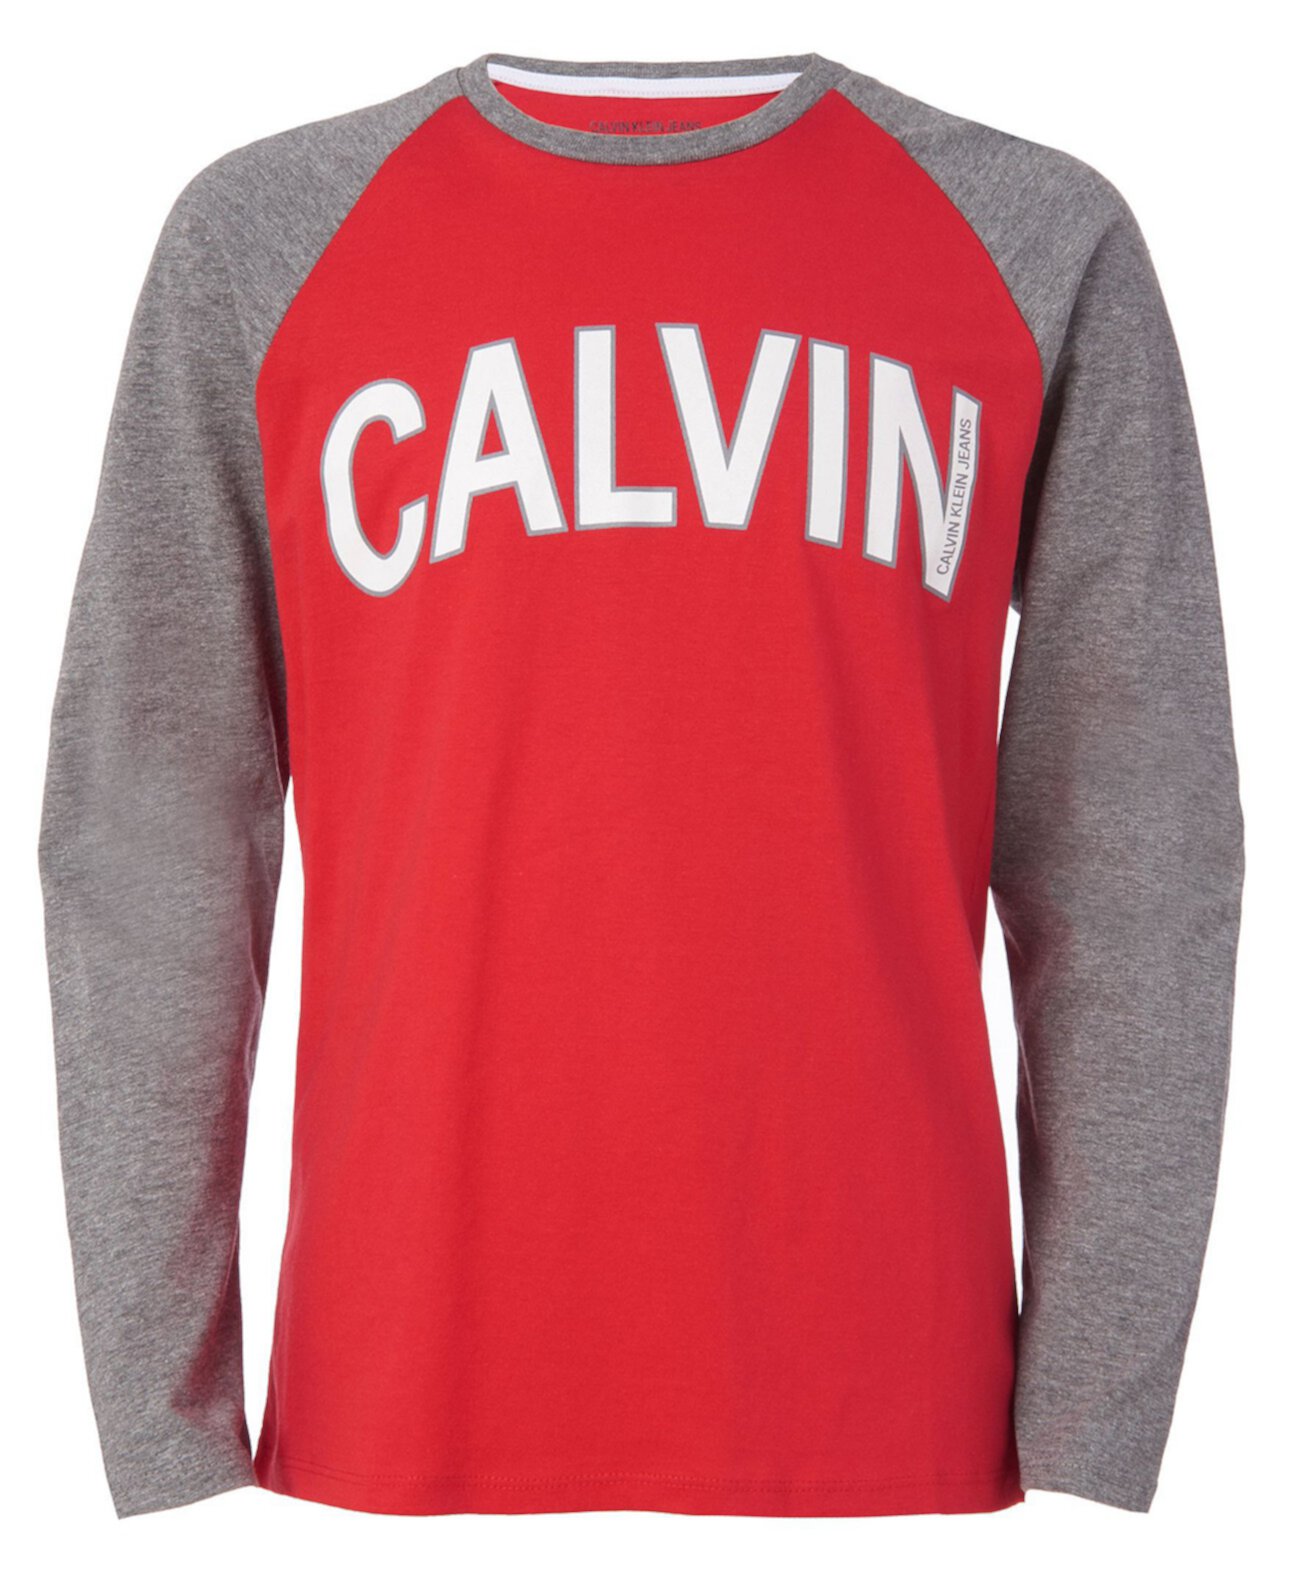 Футболка реглан с длинными рукавами и логотипом Little Boys Arch Calvin Klein